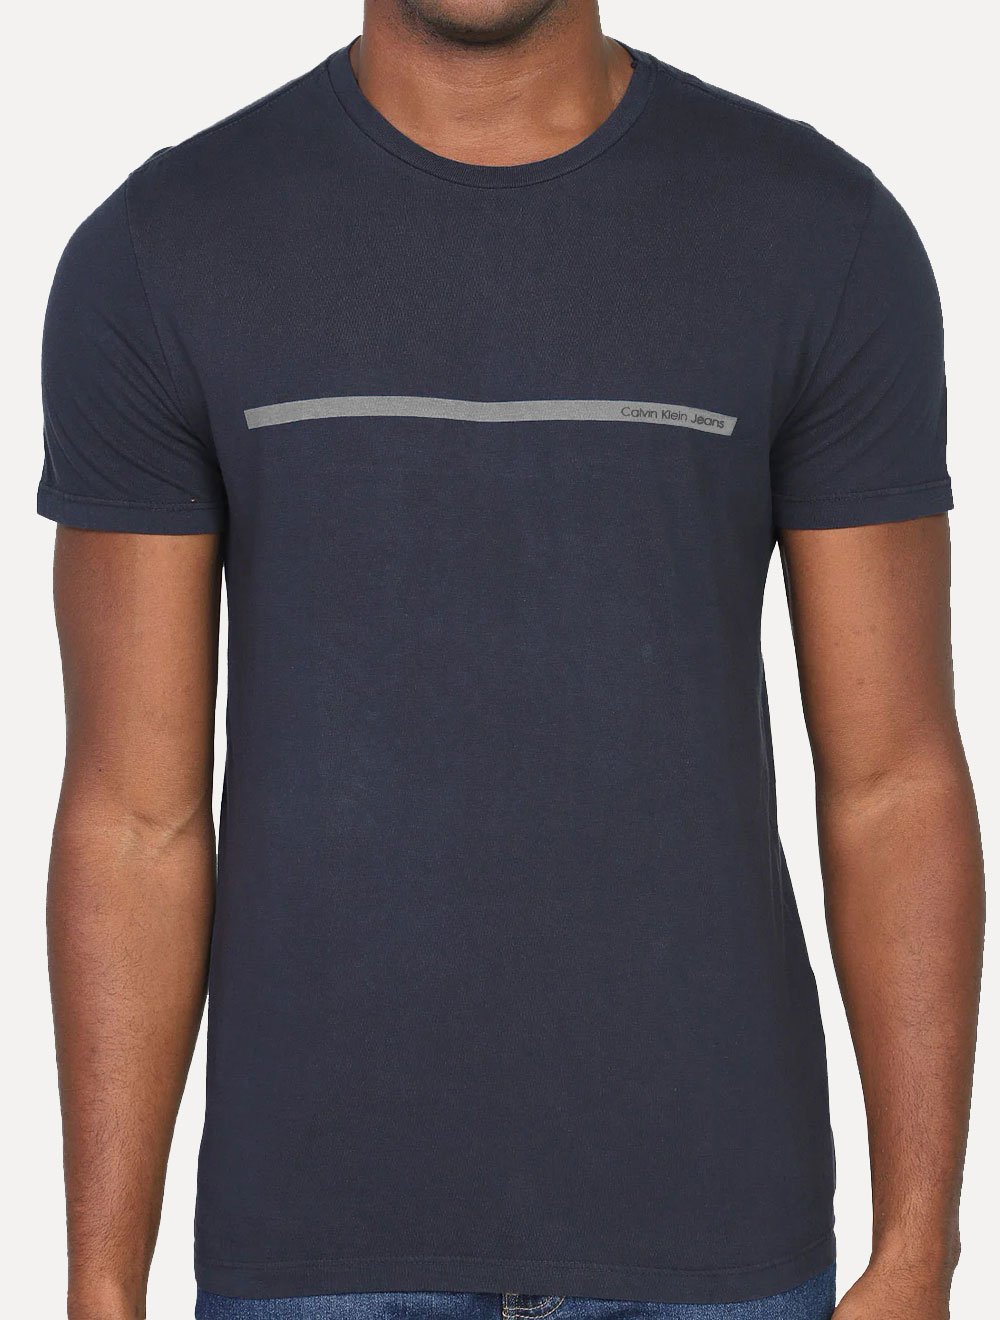 Camiseta Calvin Klein Jeans Masculina New Logo Sash Azul Marinho